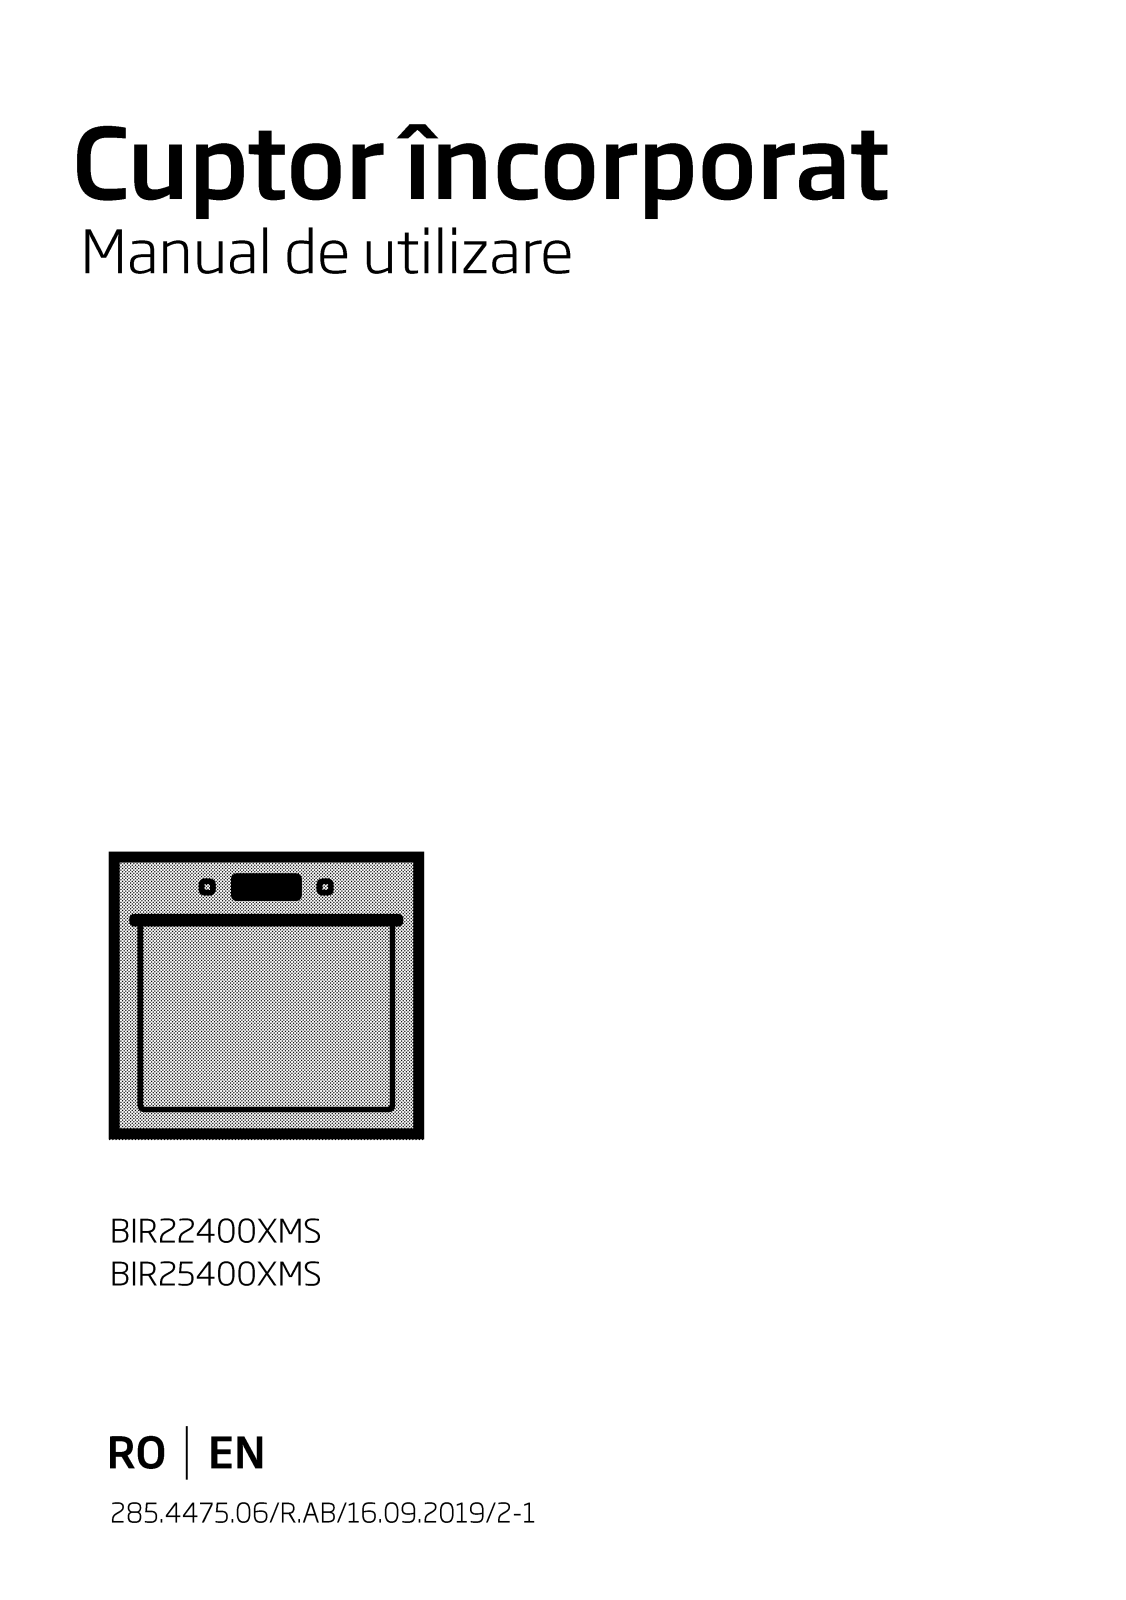 Beko BIR25400XMS User Manual